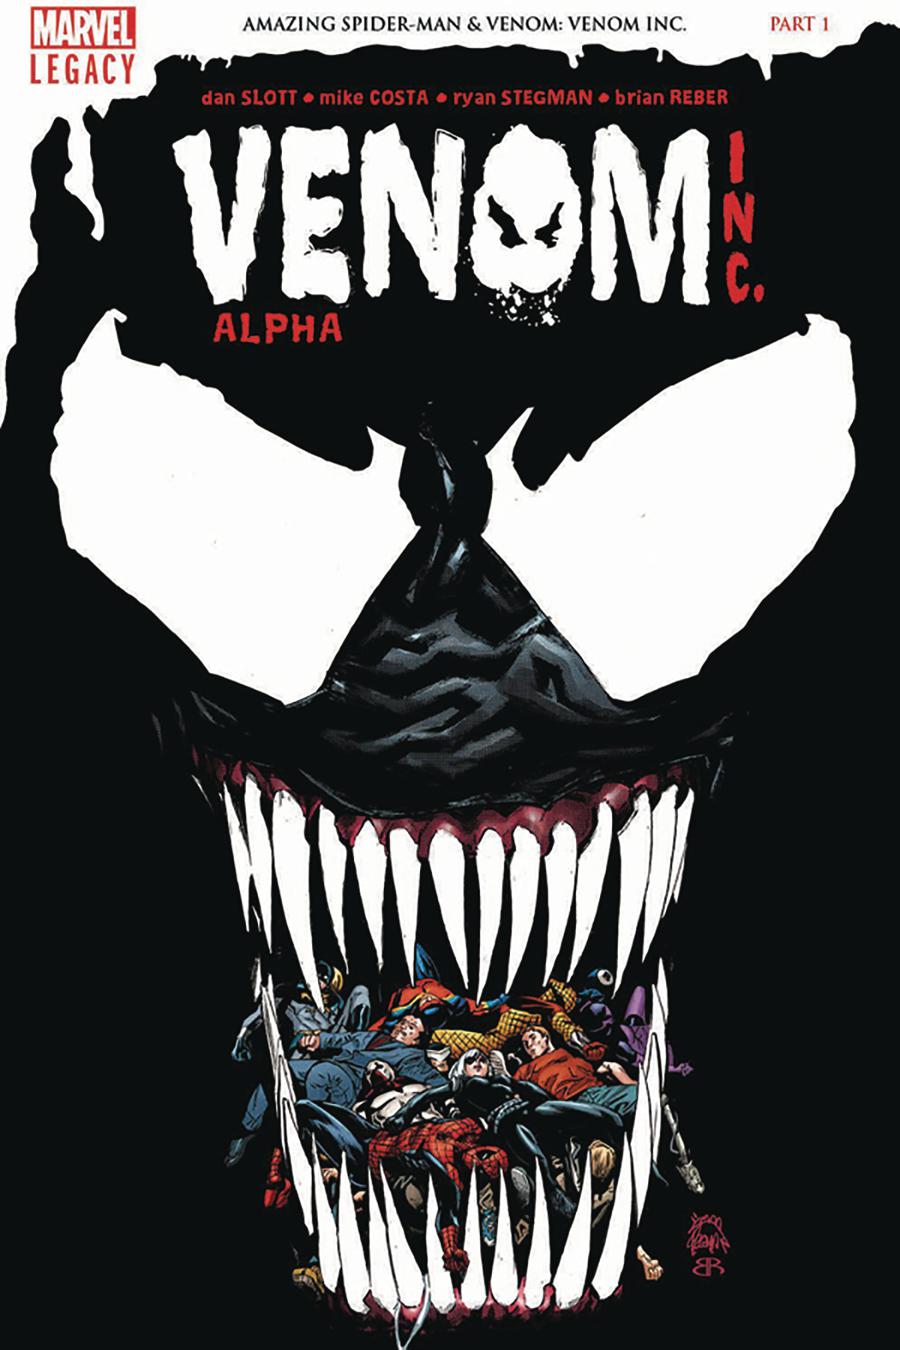 Amazing Spider-Man Venom Venom Inc Alpha #1 Cover D DF Signed By John Romita Sr (Venom Inc Part 1)(Marvel Legacy Tie-In)